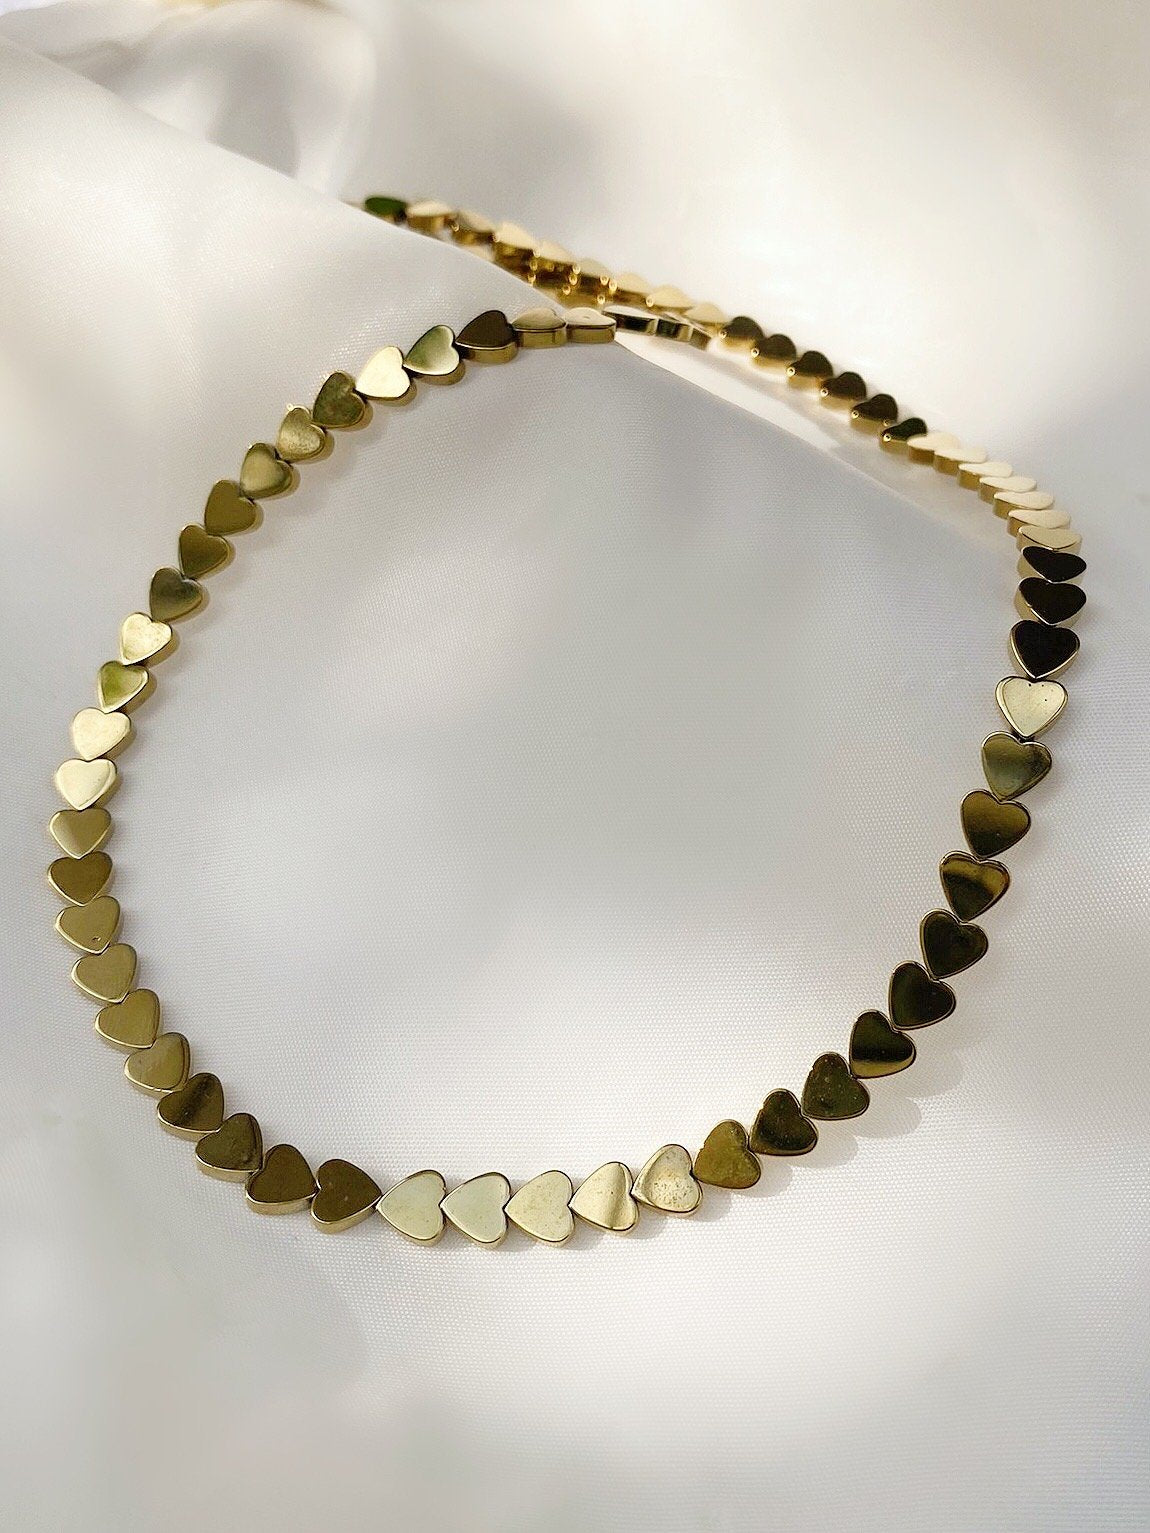 Harmonia necklace on display